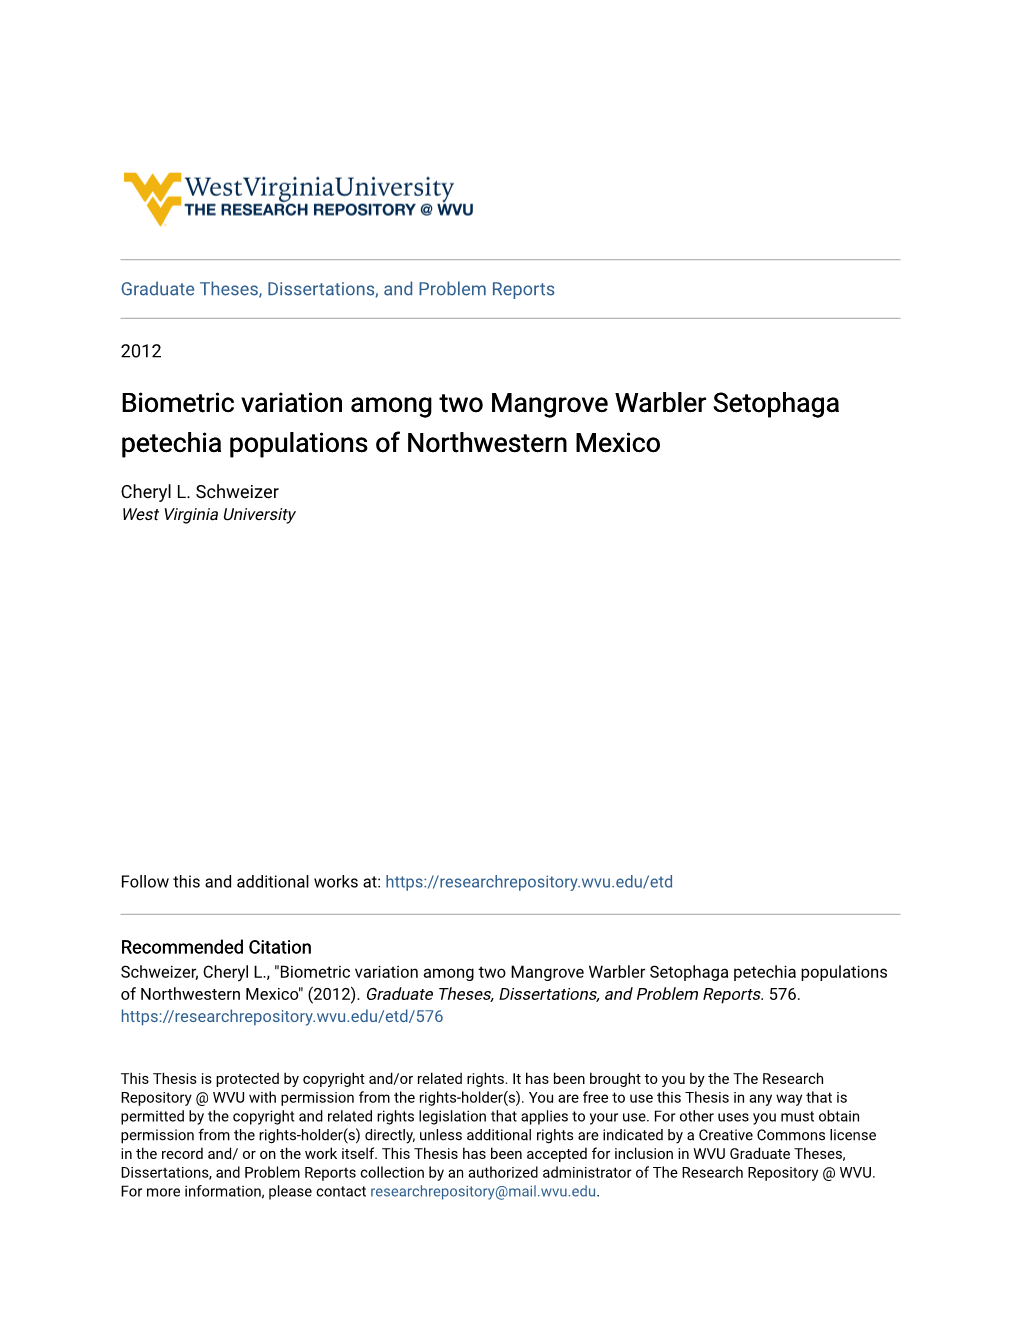 Biometric Variation Among Two Mangrove Warbler Setophaga Petechia Populations of Northwestern Mexico